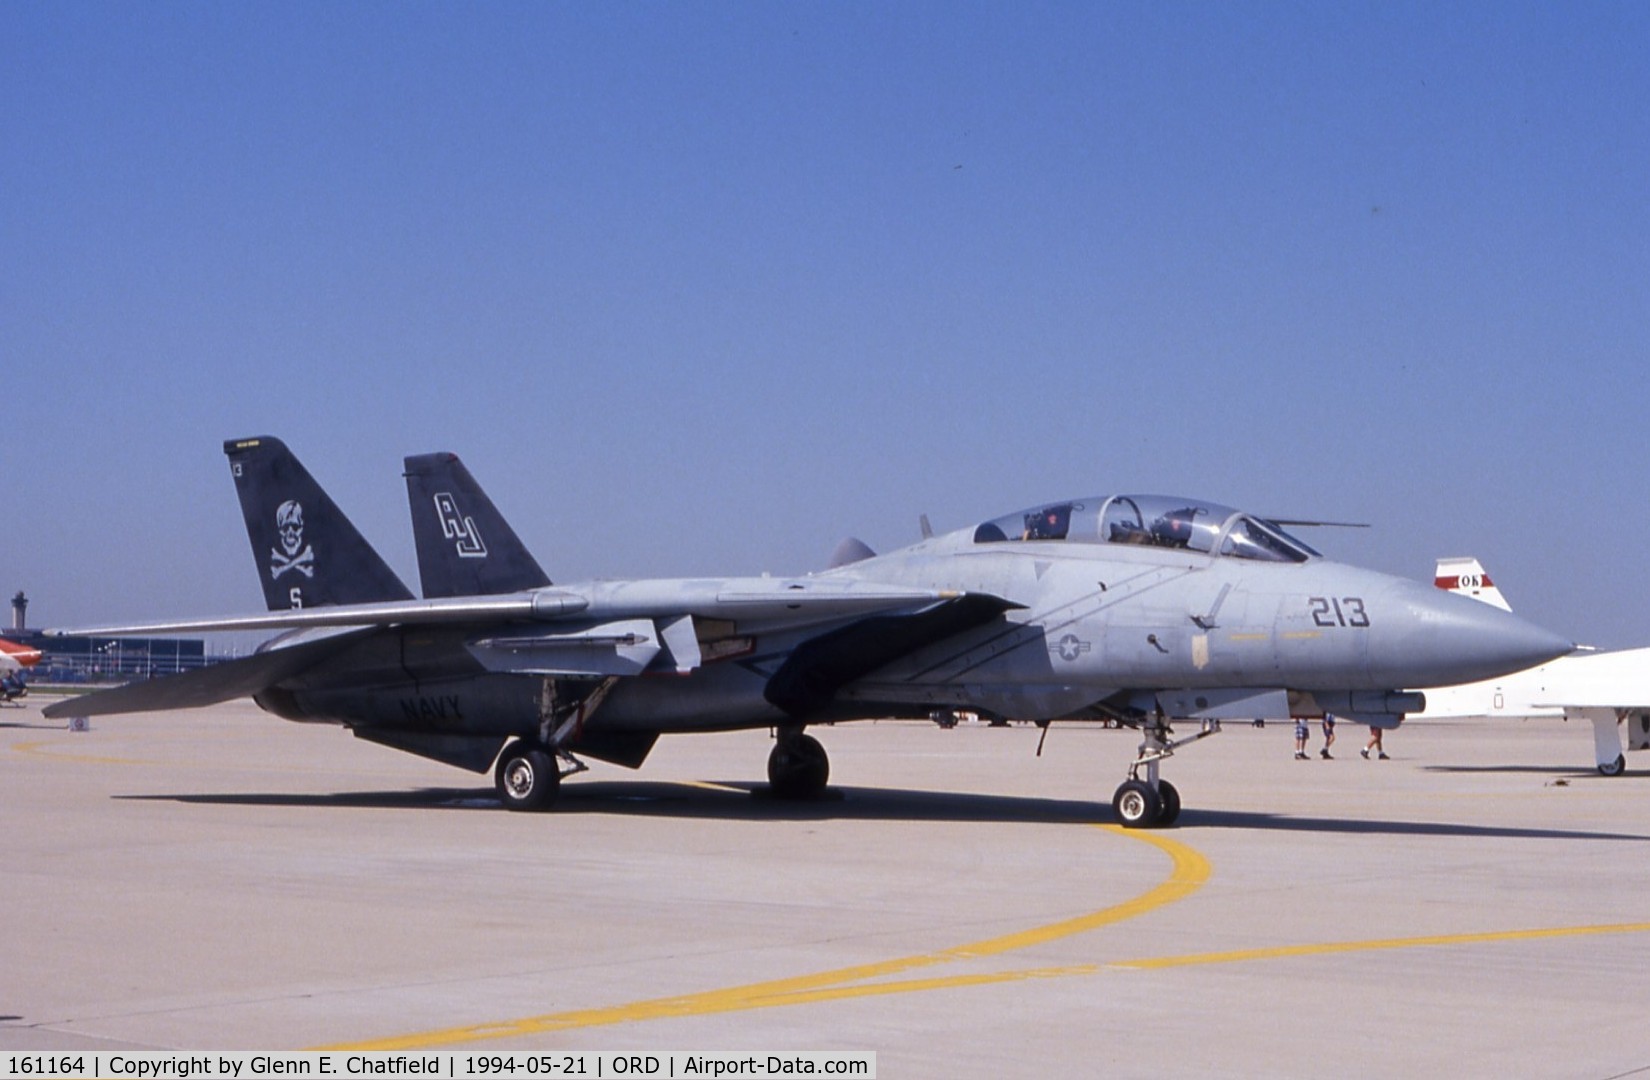 161164, Grumman F-14A-110-GR Tomcat C/N 391, F-14A at the ANG/AFR open house